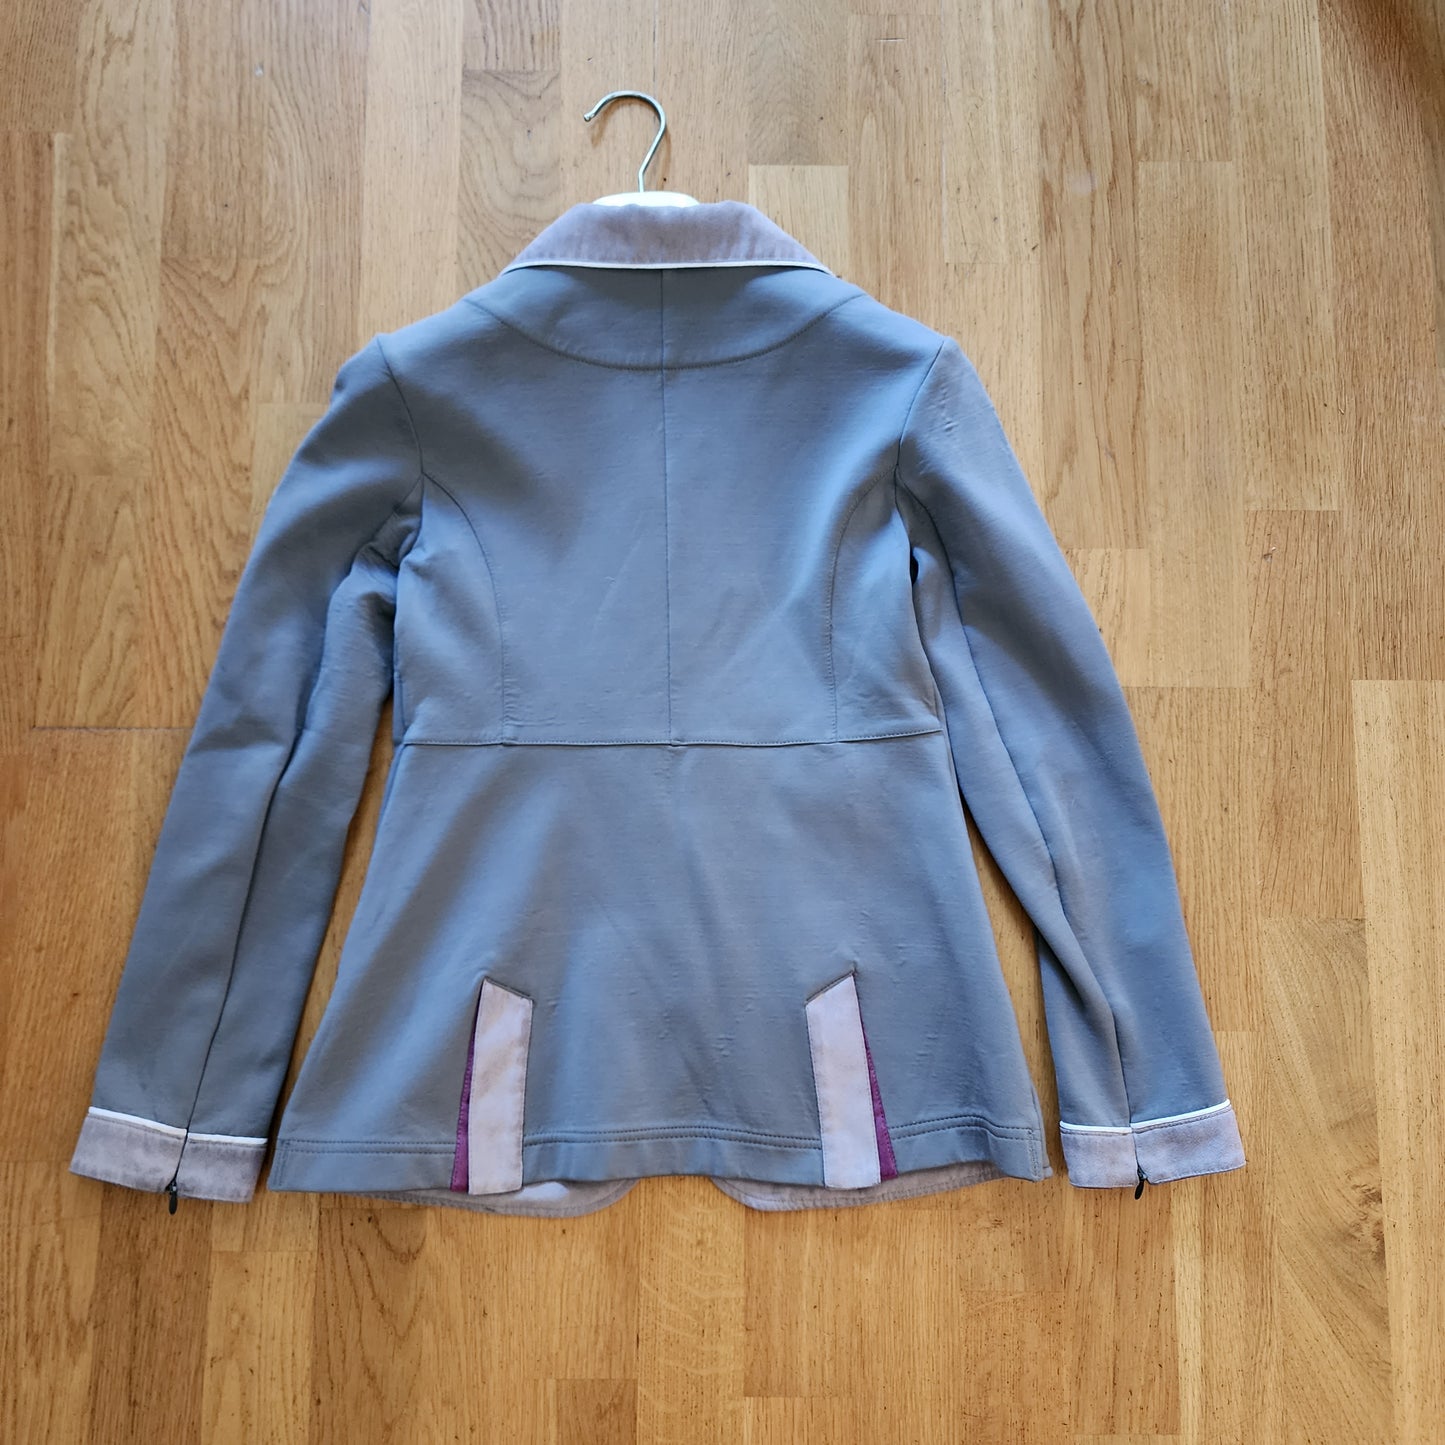 Animo grey Show Jacket (girls size 12)